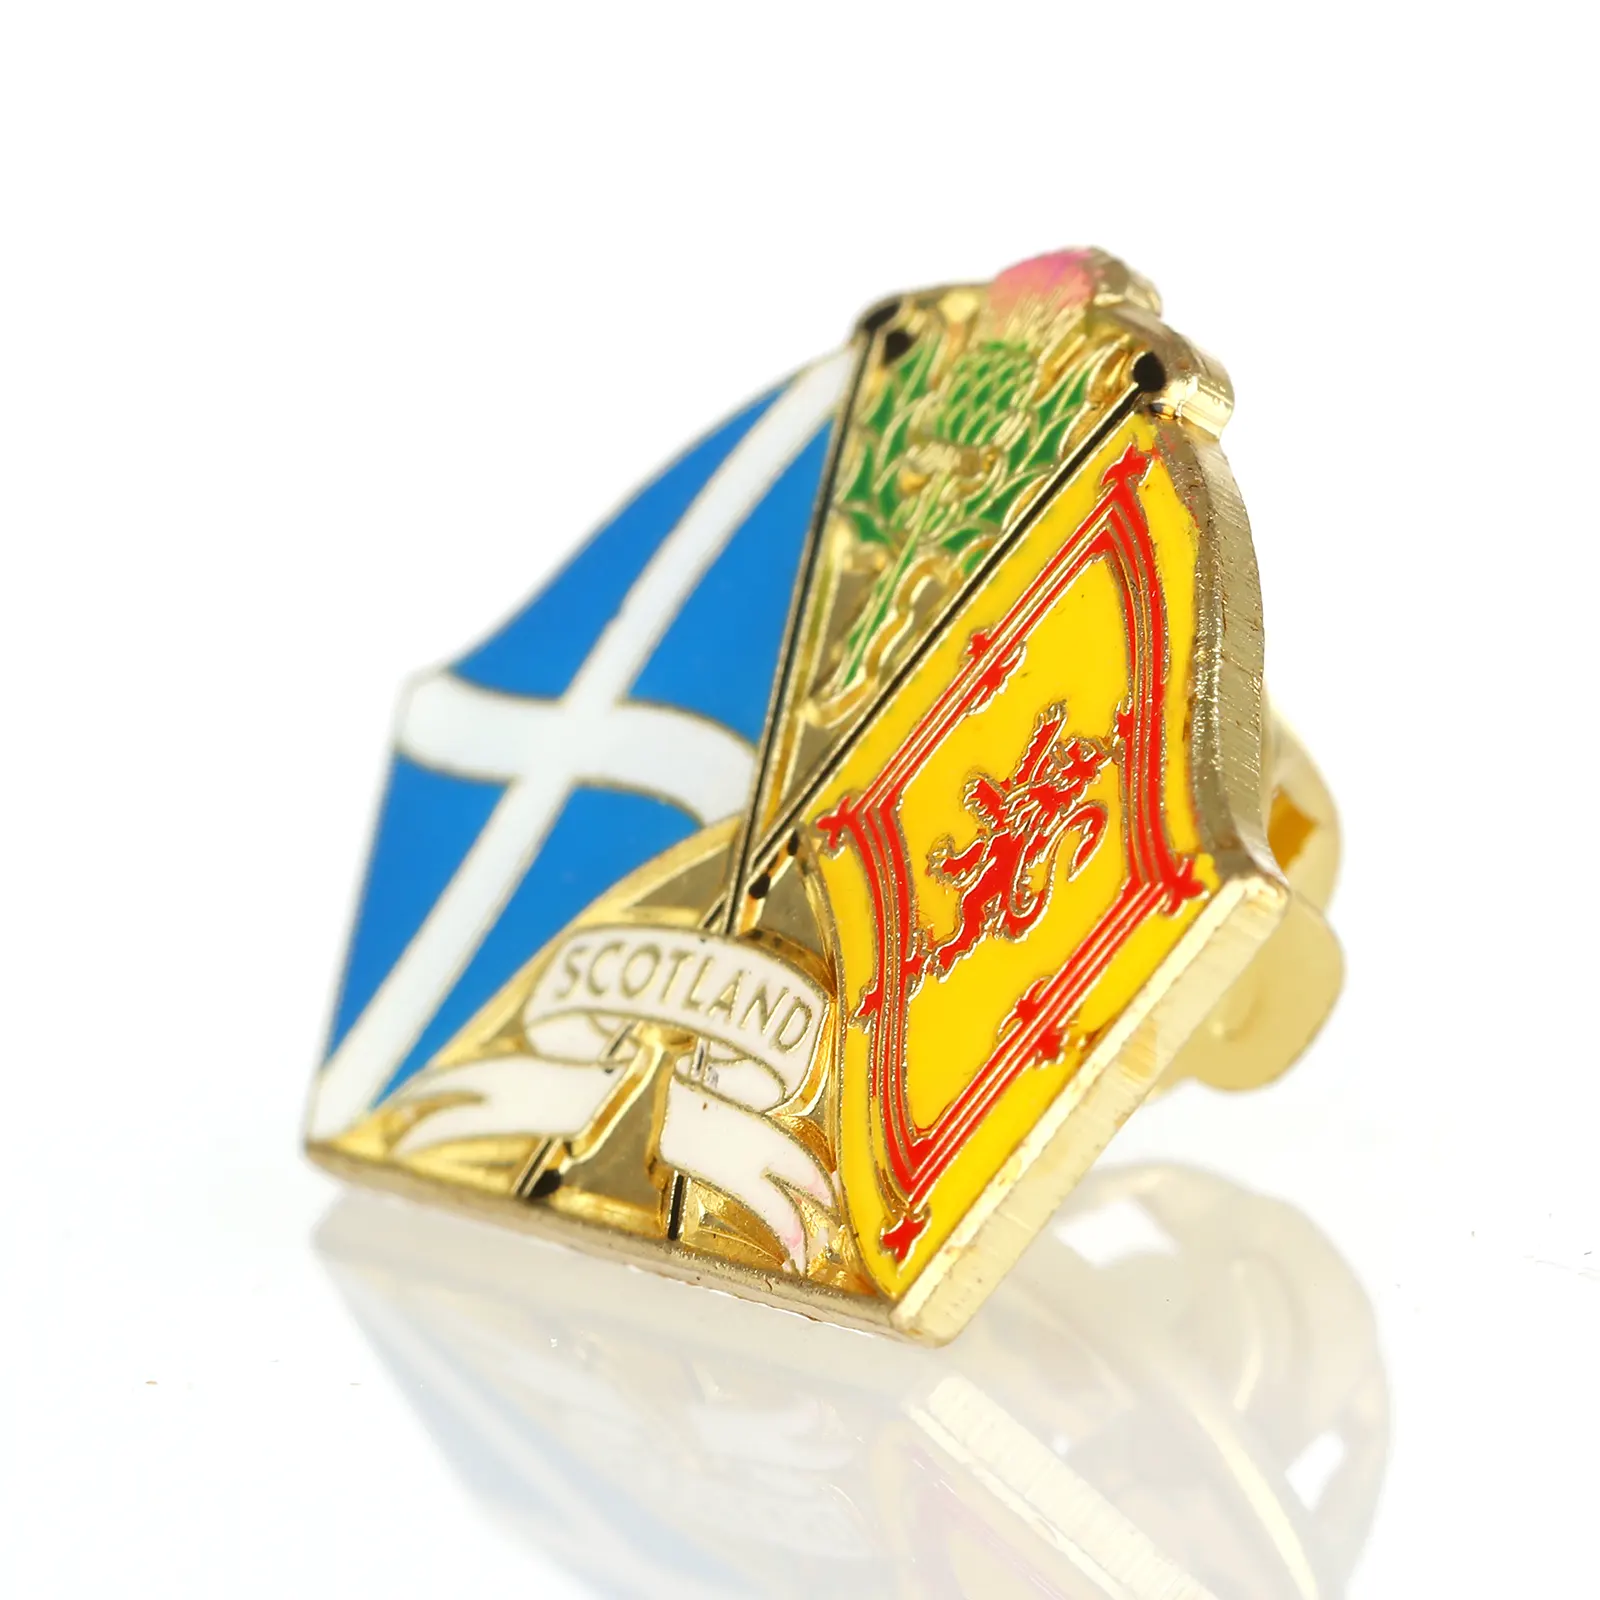 Scottish Symbols Pin Badge - Anstecknadel aus Schottland - Metall & Emaille